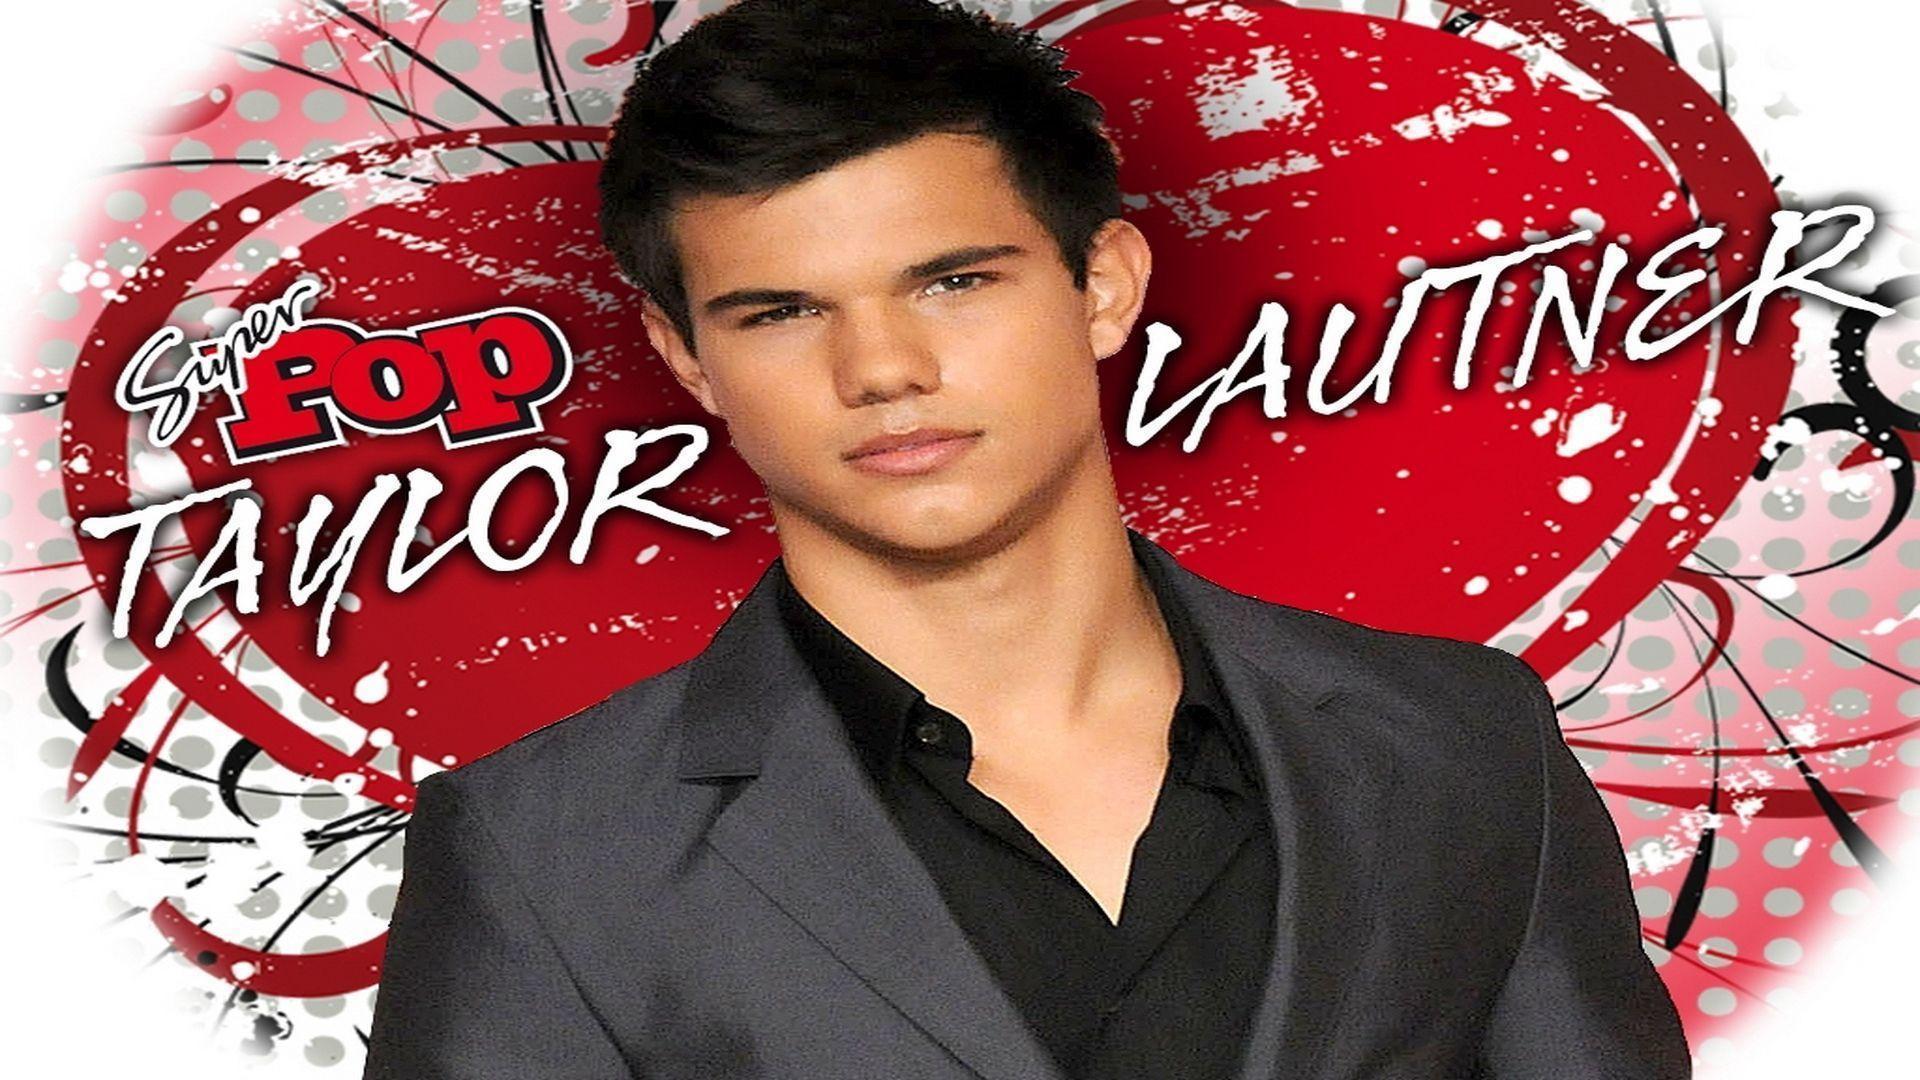 Taylor Lautner Wallpaper HD